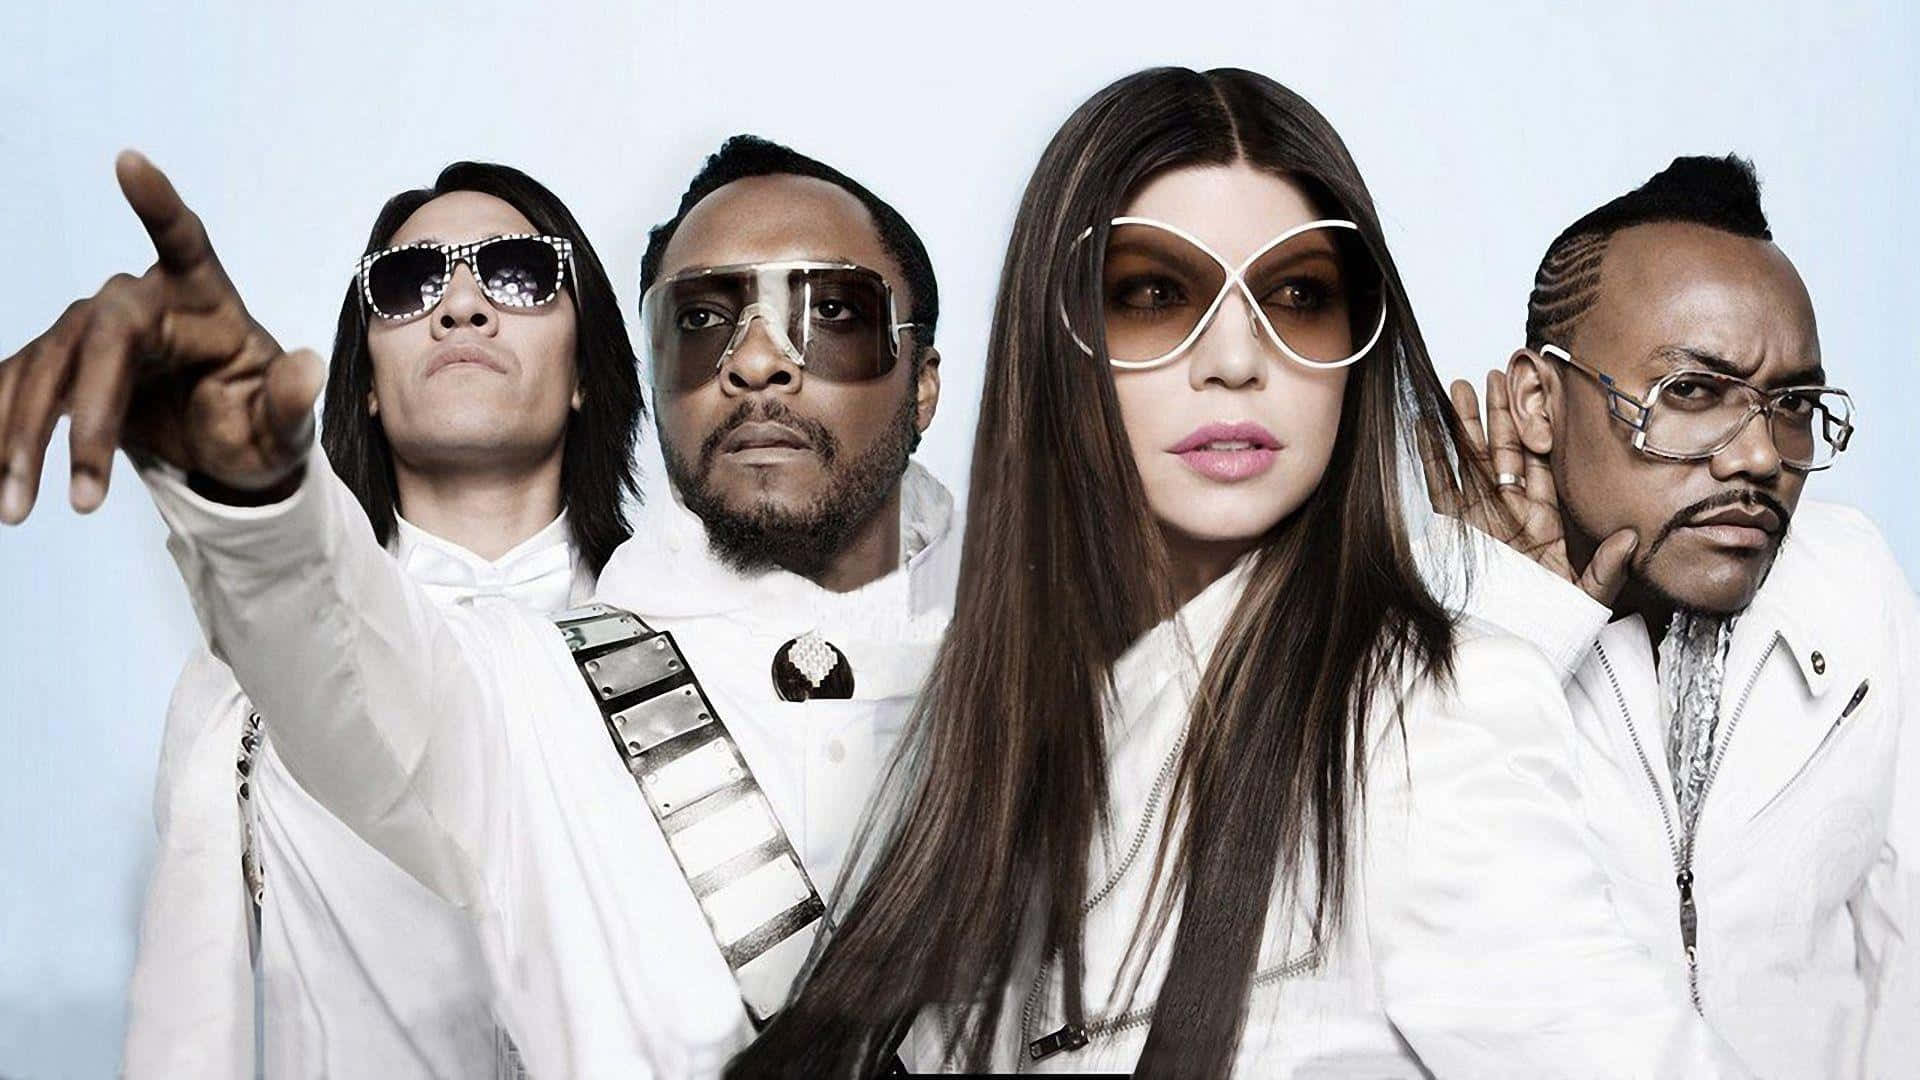 The Black Eyed Peas in their Groundbreaking Music Video Wallpaper